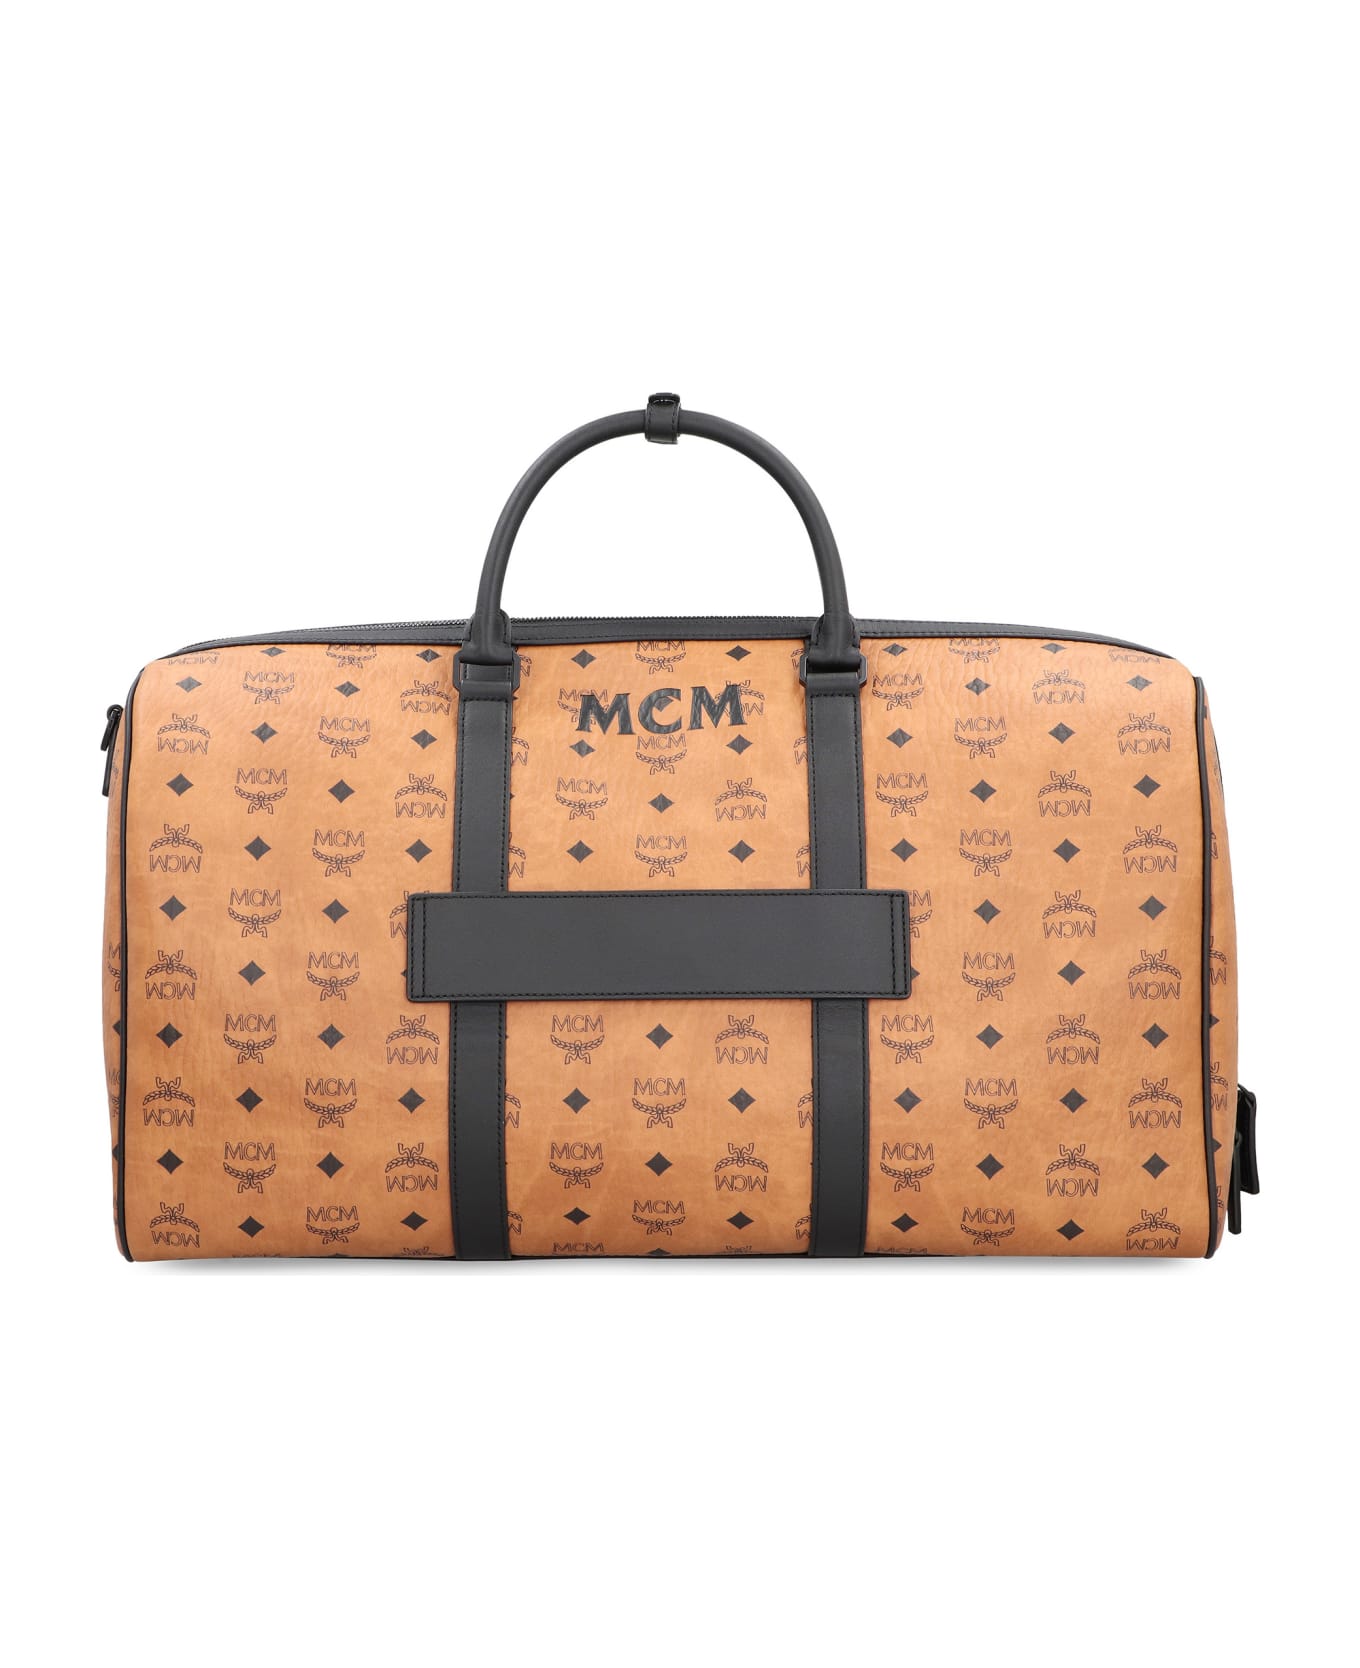 MCM Ottomar Weekender Travel Bag - Saddle Brown